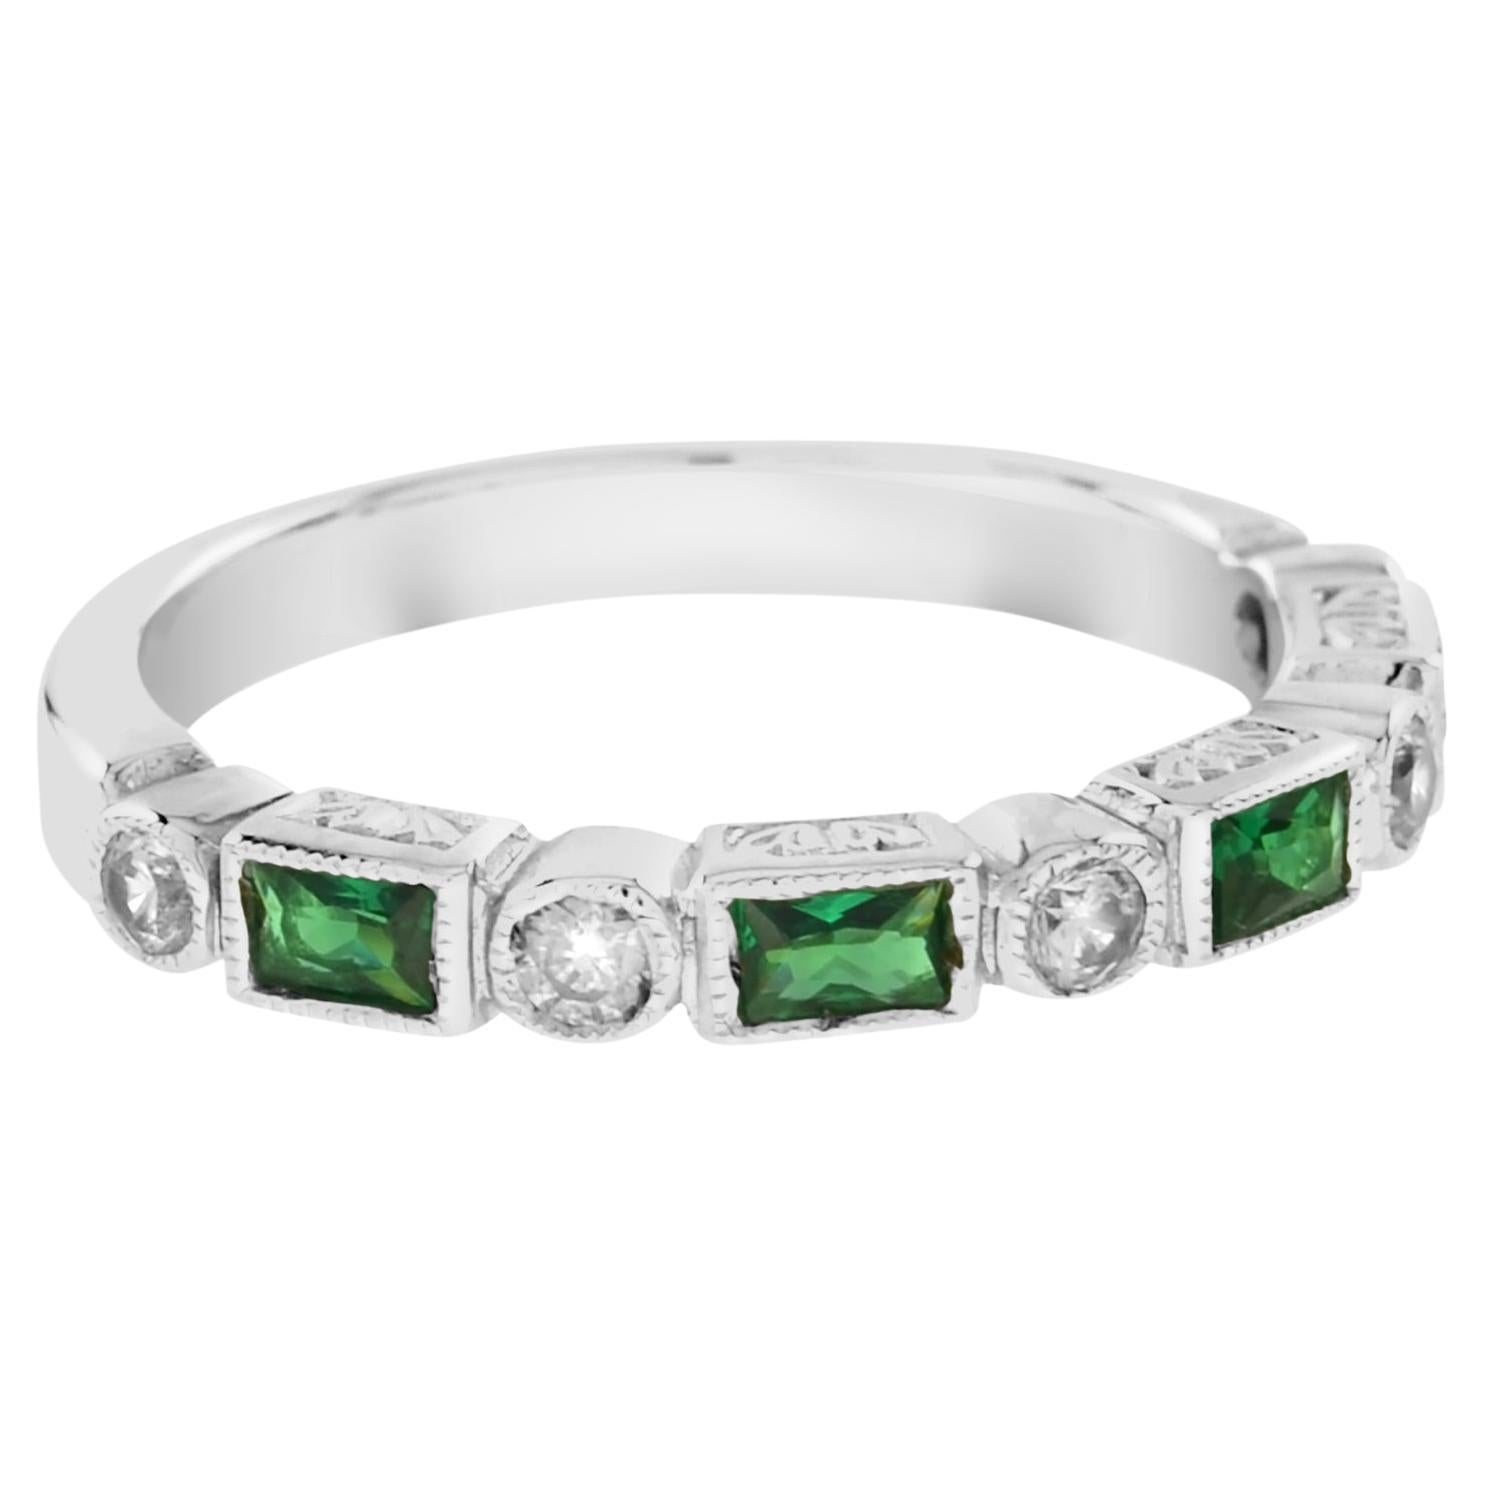 Aimée Alternate Emerald and Round Diamond Half Eternity Ring in 18K White Gold 